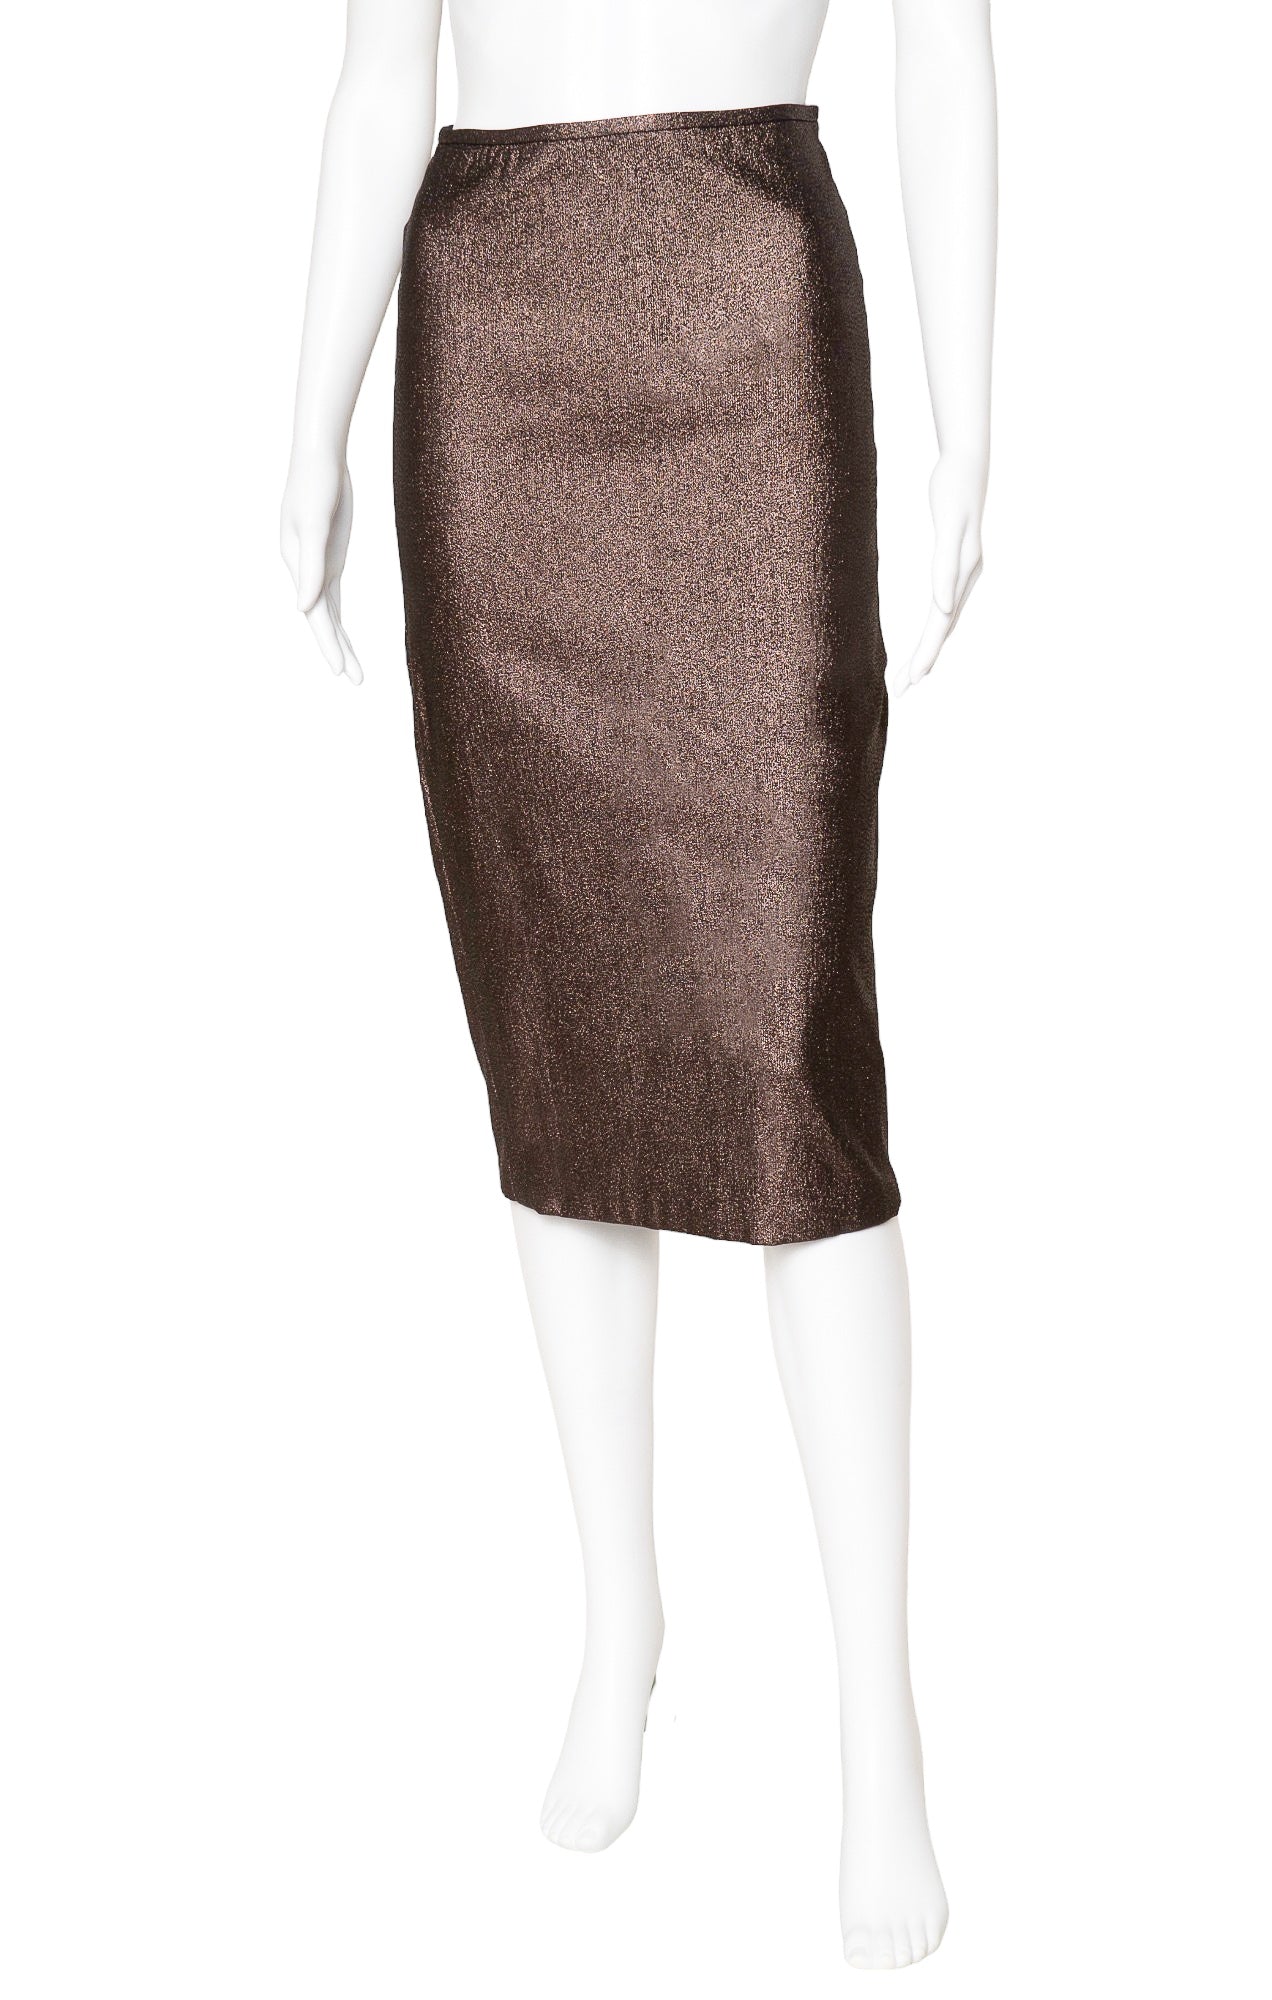 GUCCI (RARE) Skirt Size: No size tags, fits like US 2/26